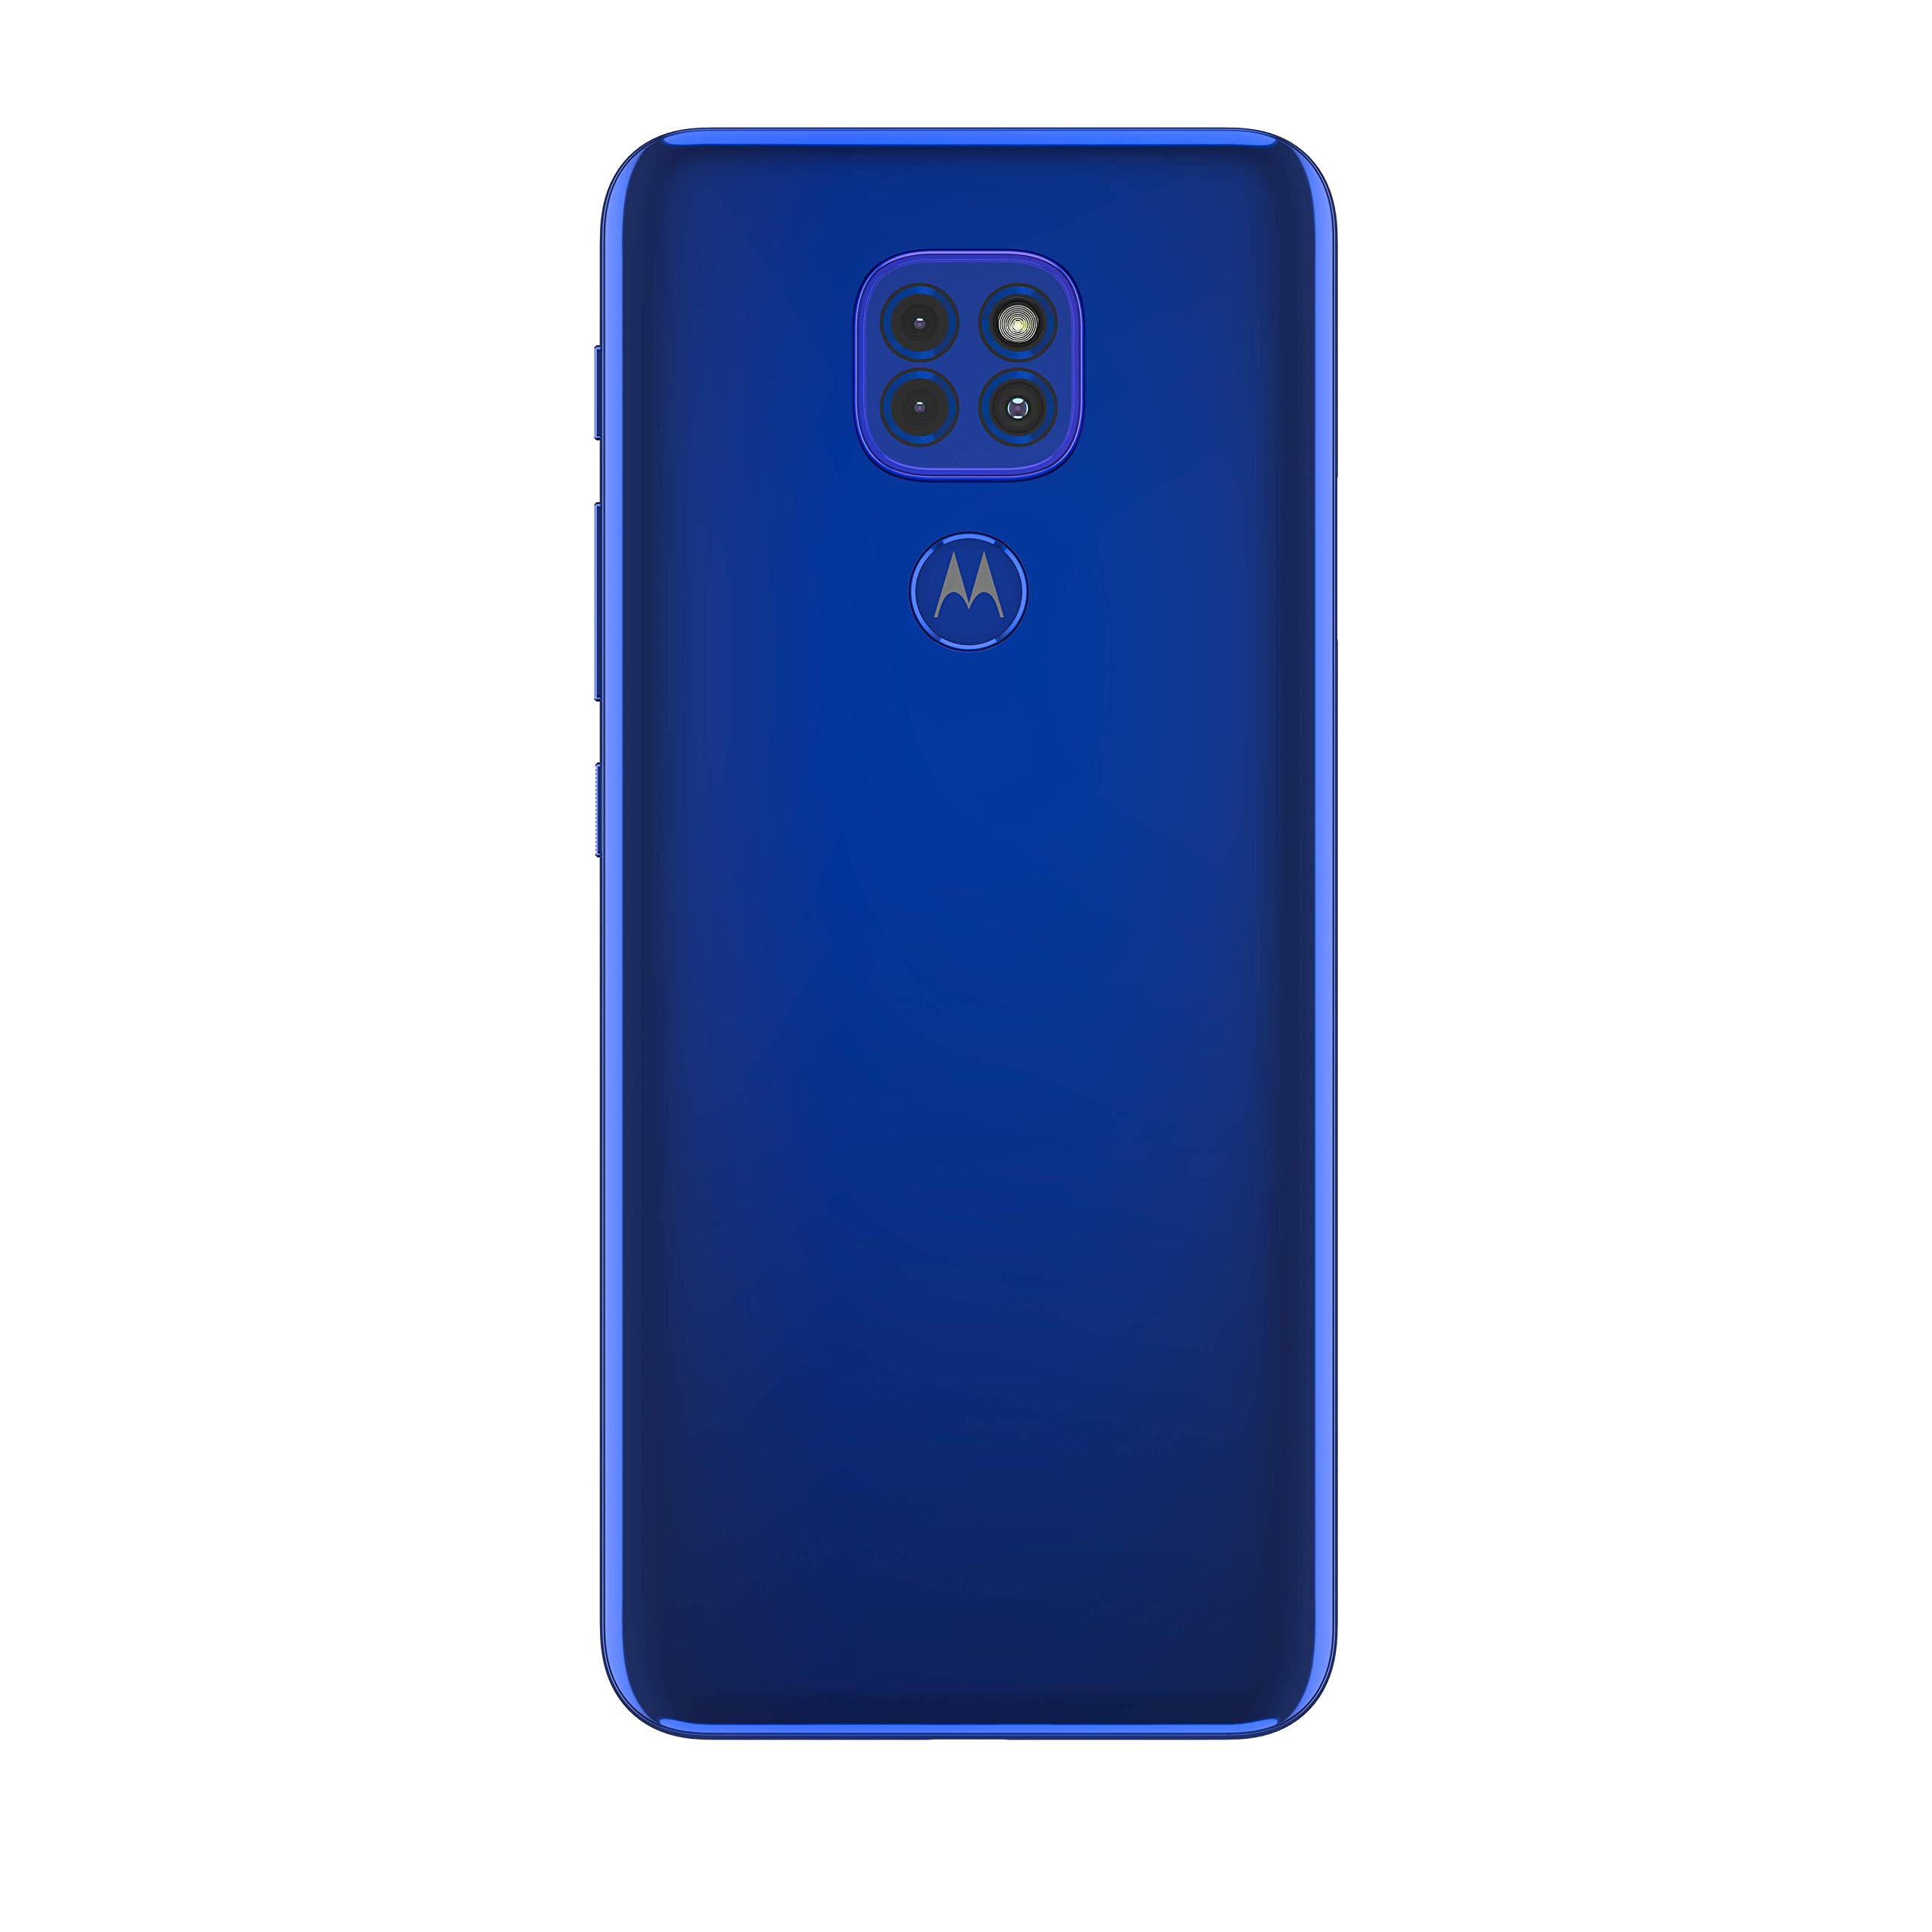 Motorola Moto G9 Play XT2083 Dual-SIM 64GB + 4GB RAM (GSM Only | No CDMA) Factory Unlocked 4G/LTE Smartphone (Sapphire Blue) - International Version